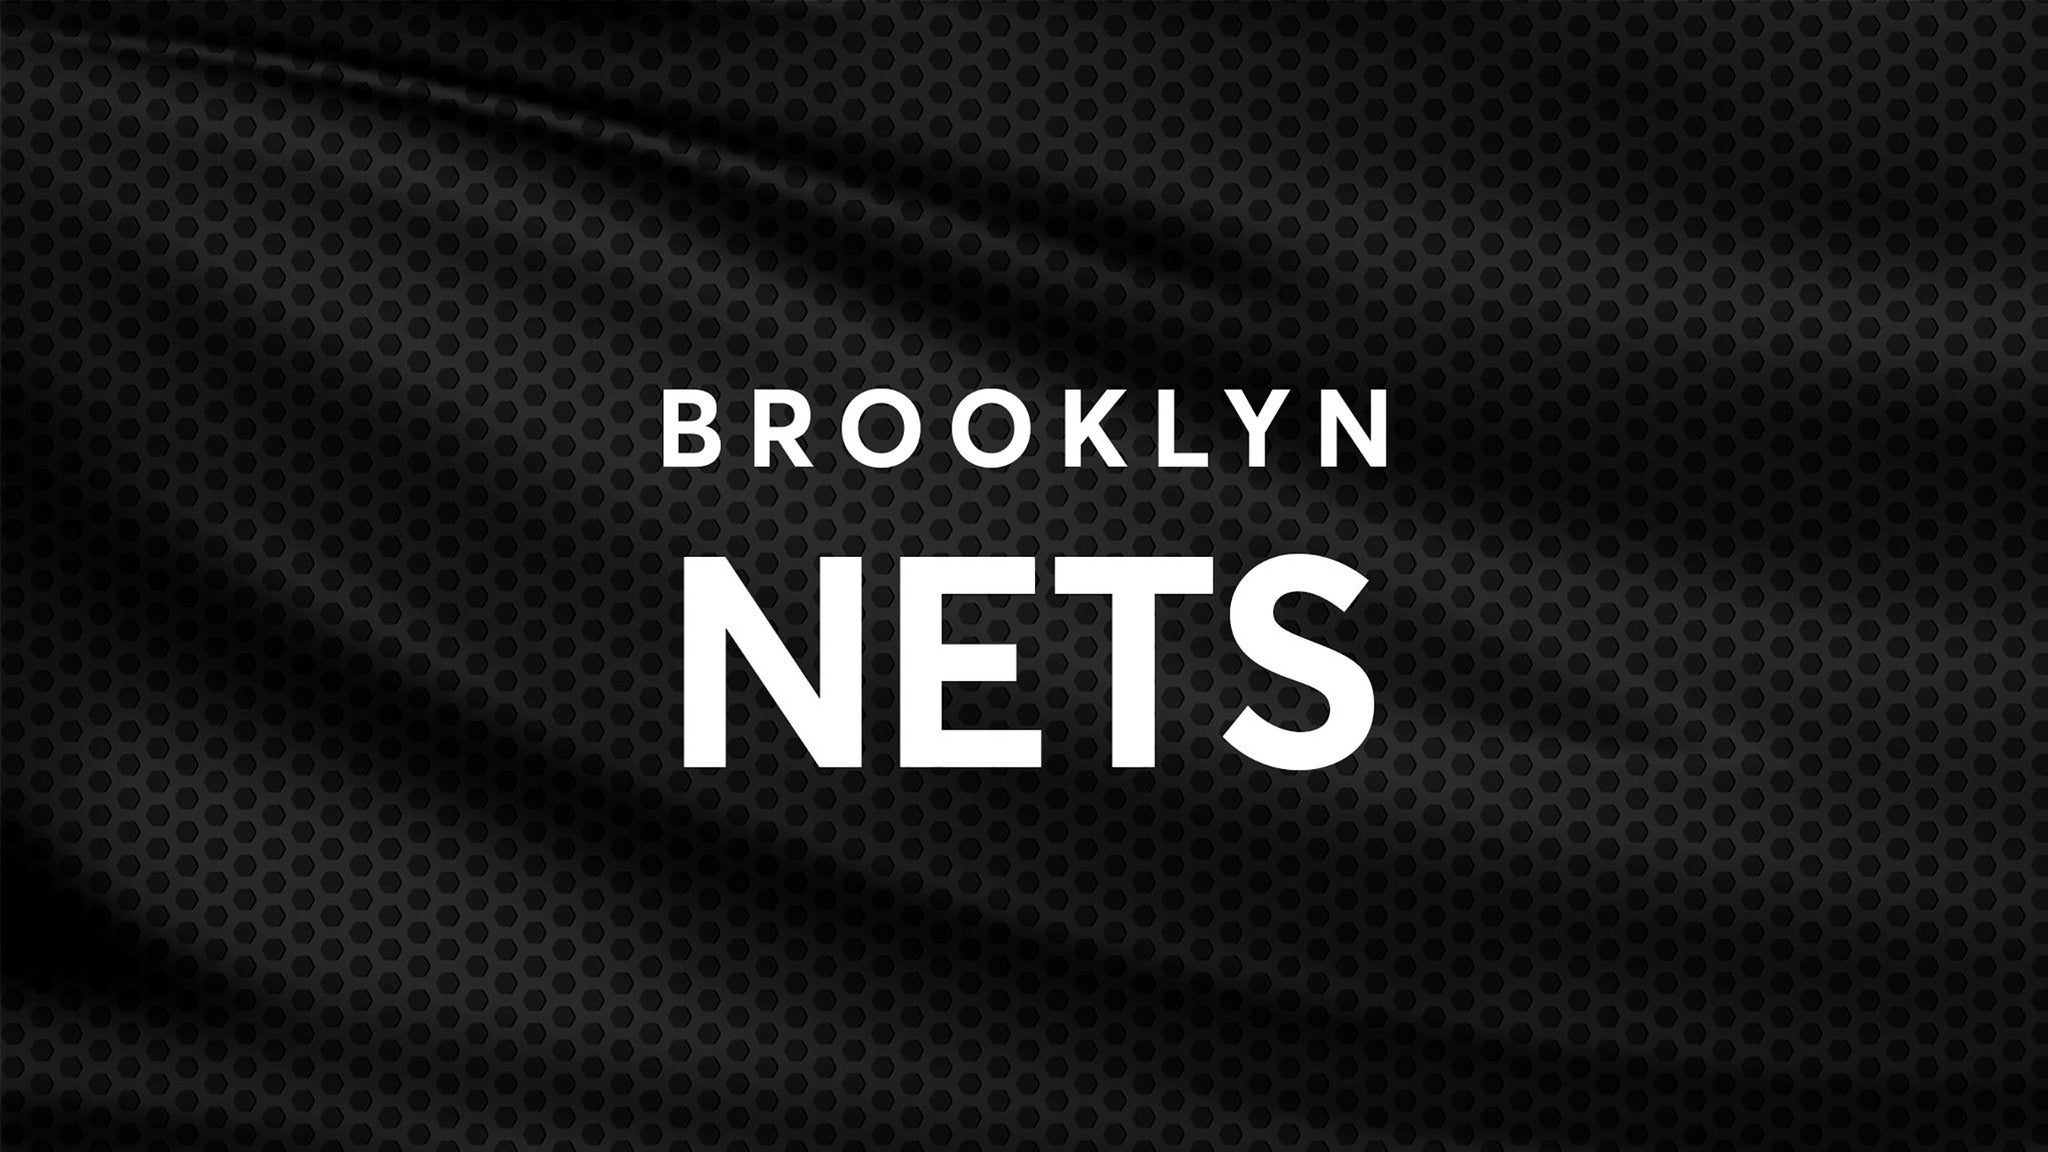 Nets The Nets'